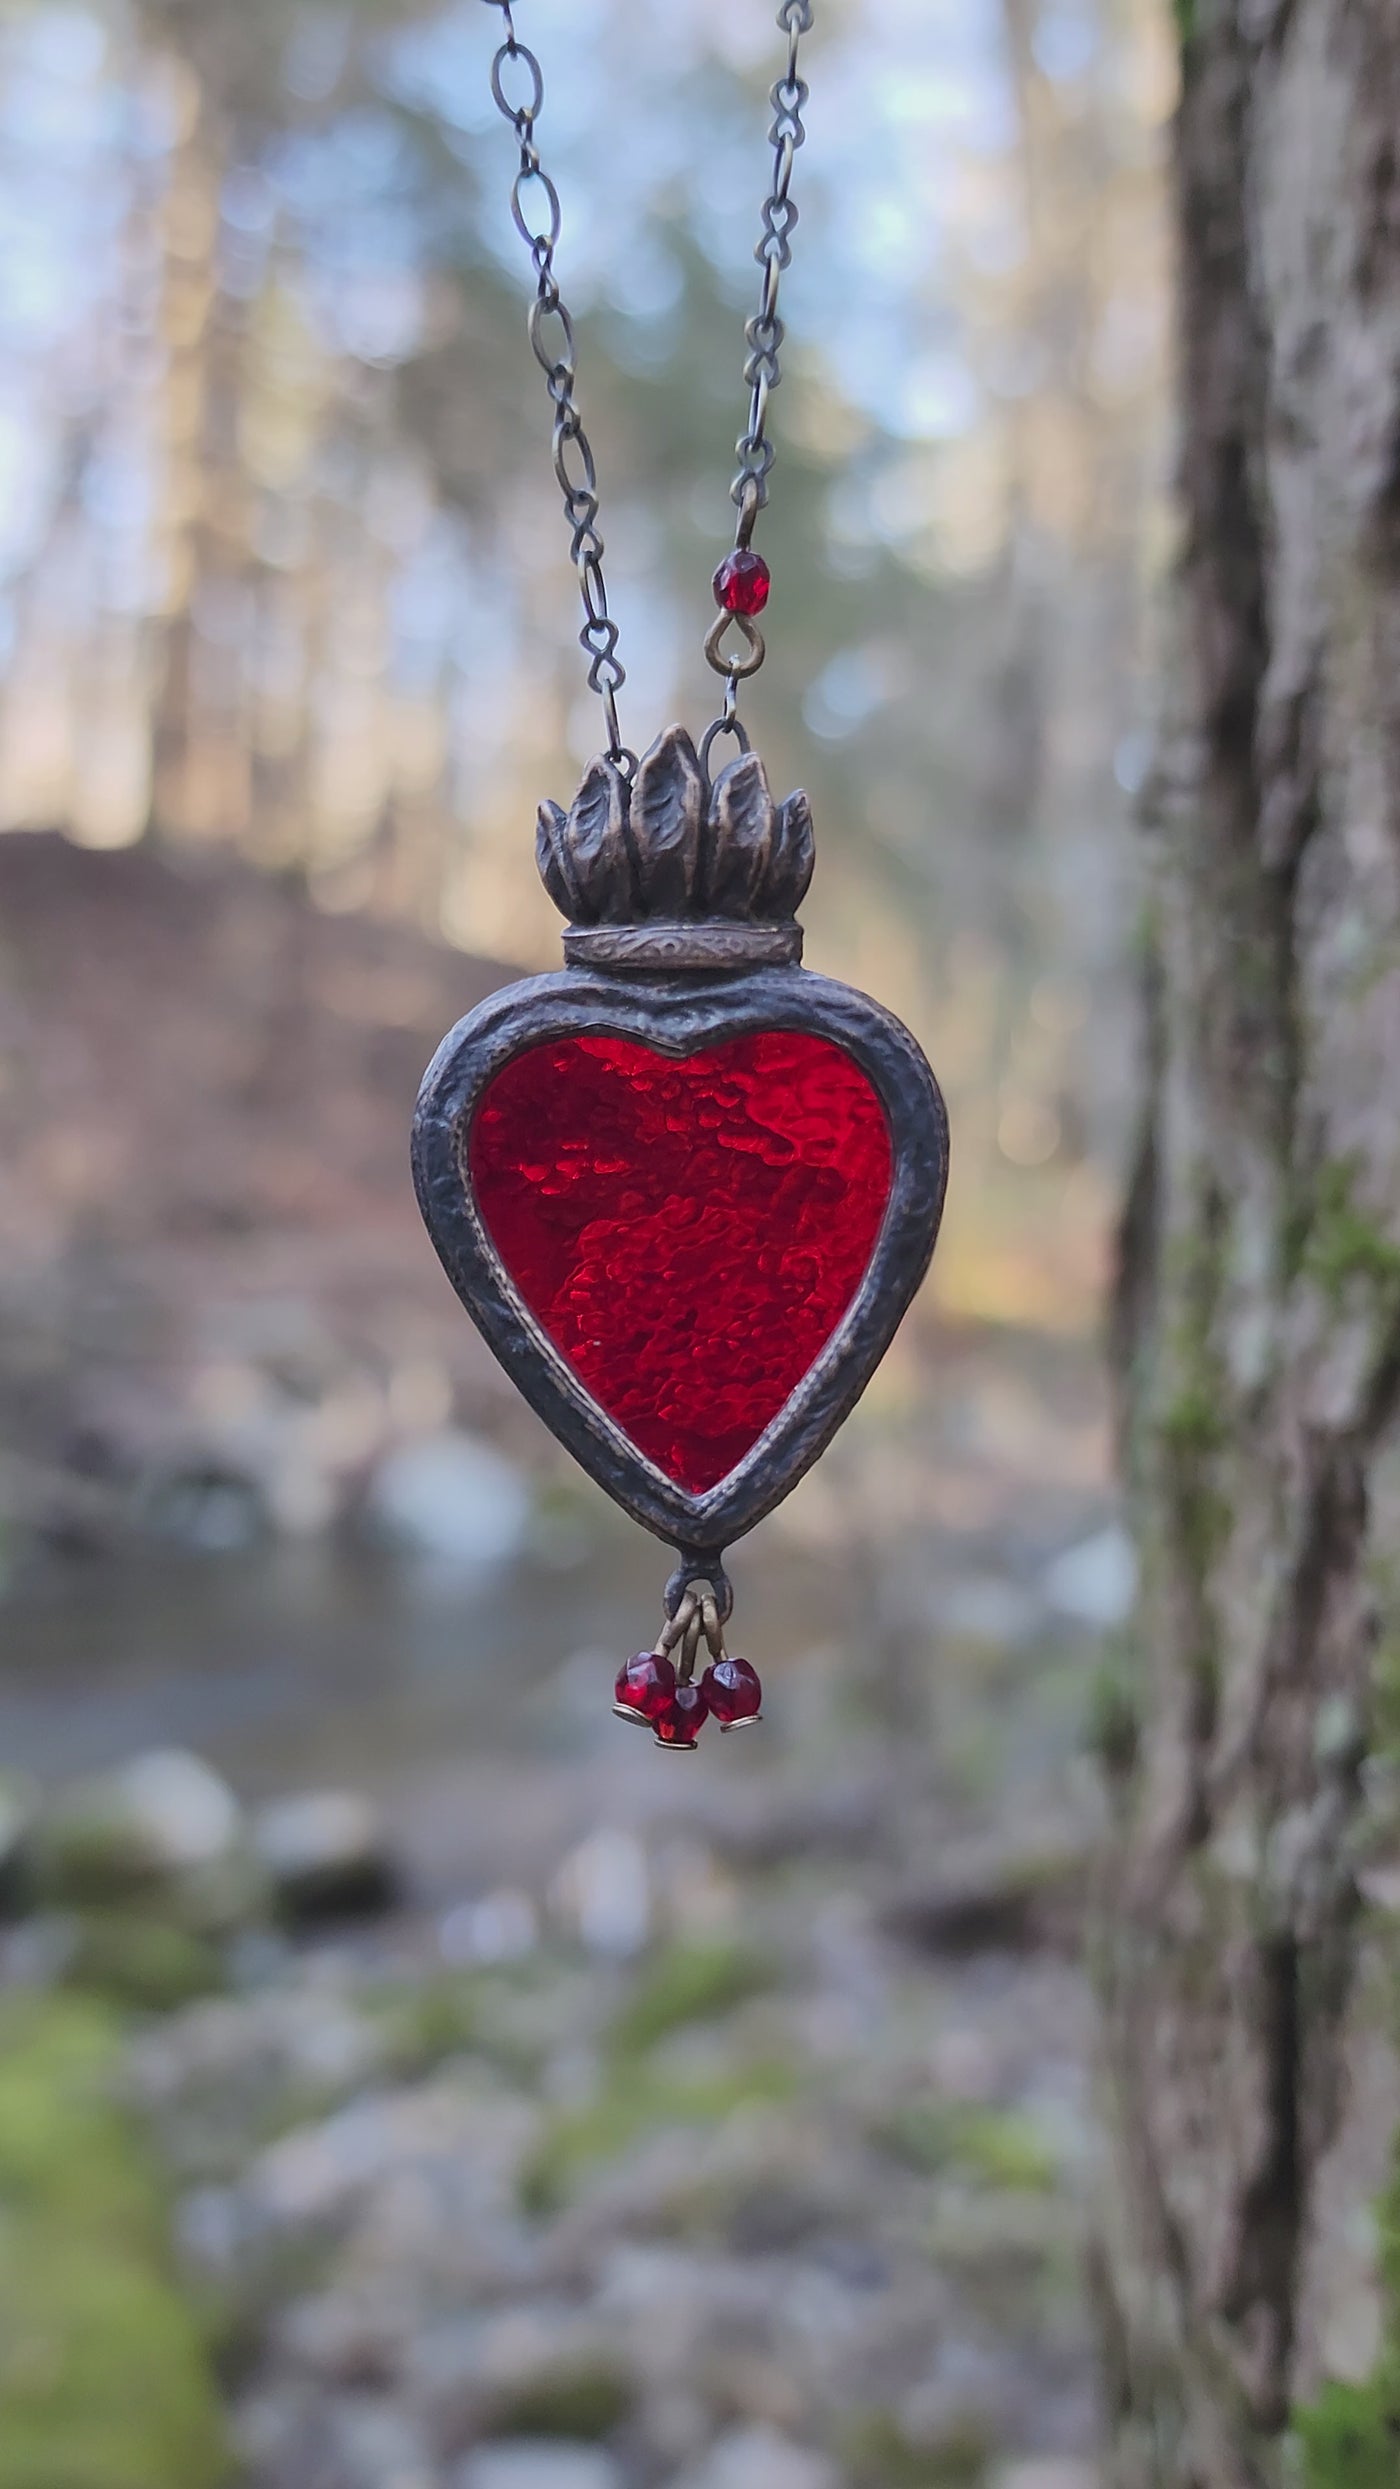 trinitas - a sacred heart amulet